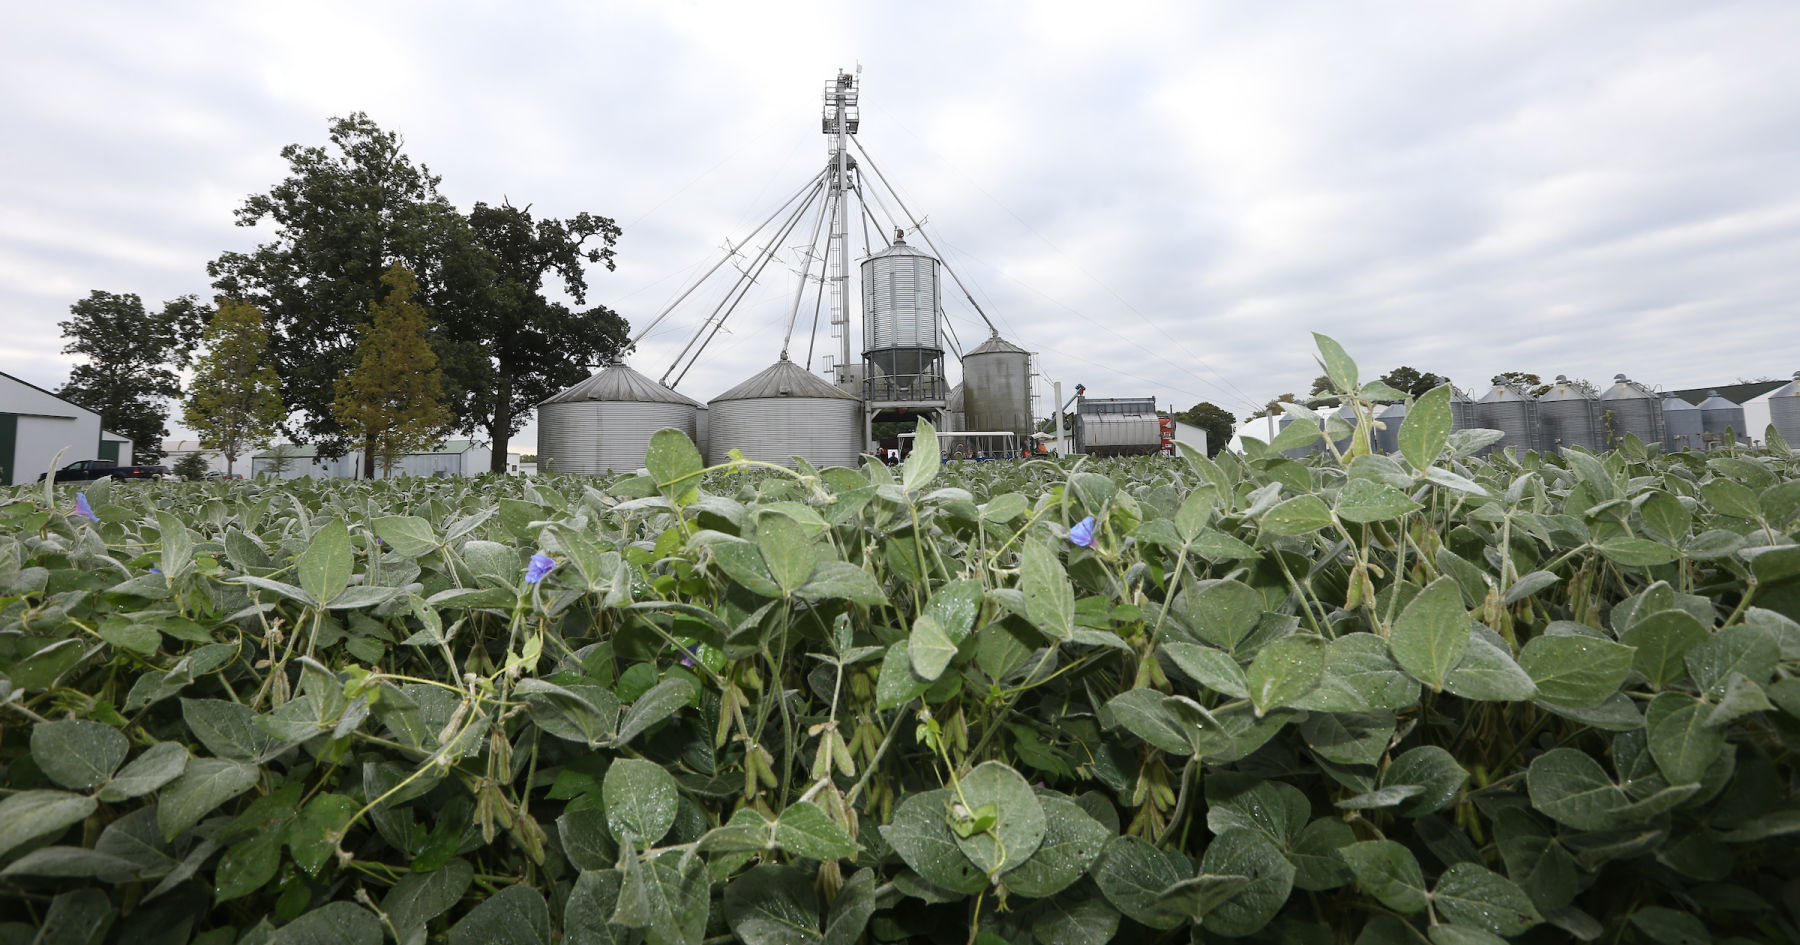 soybean field with bins